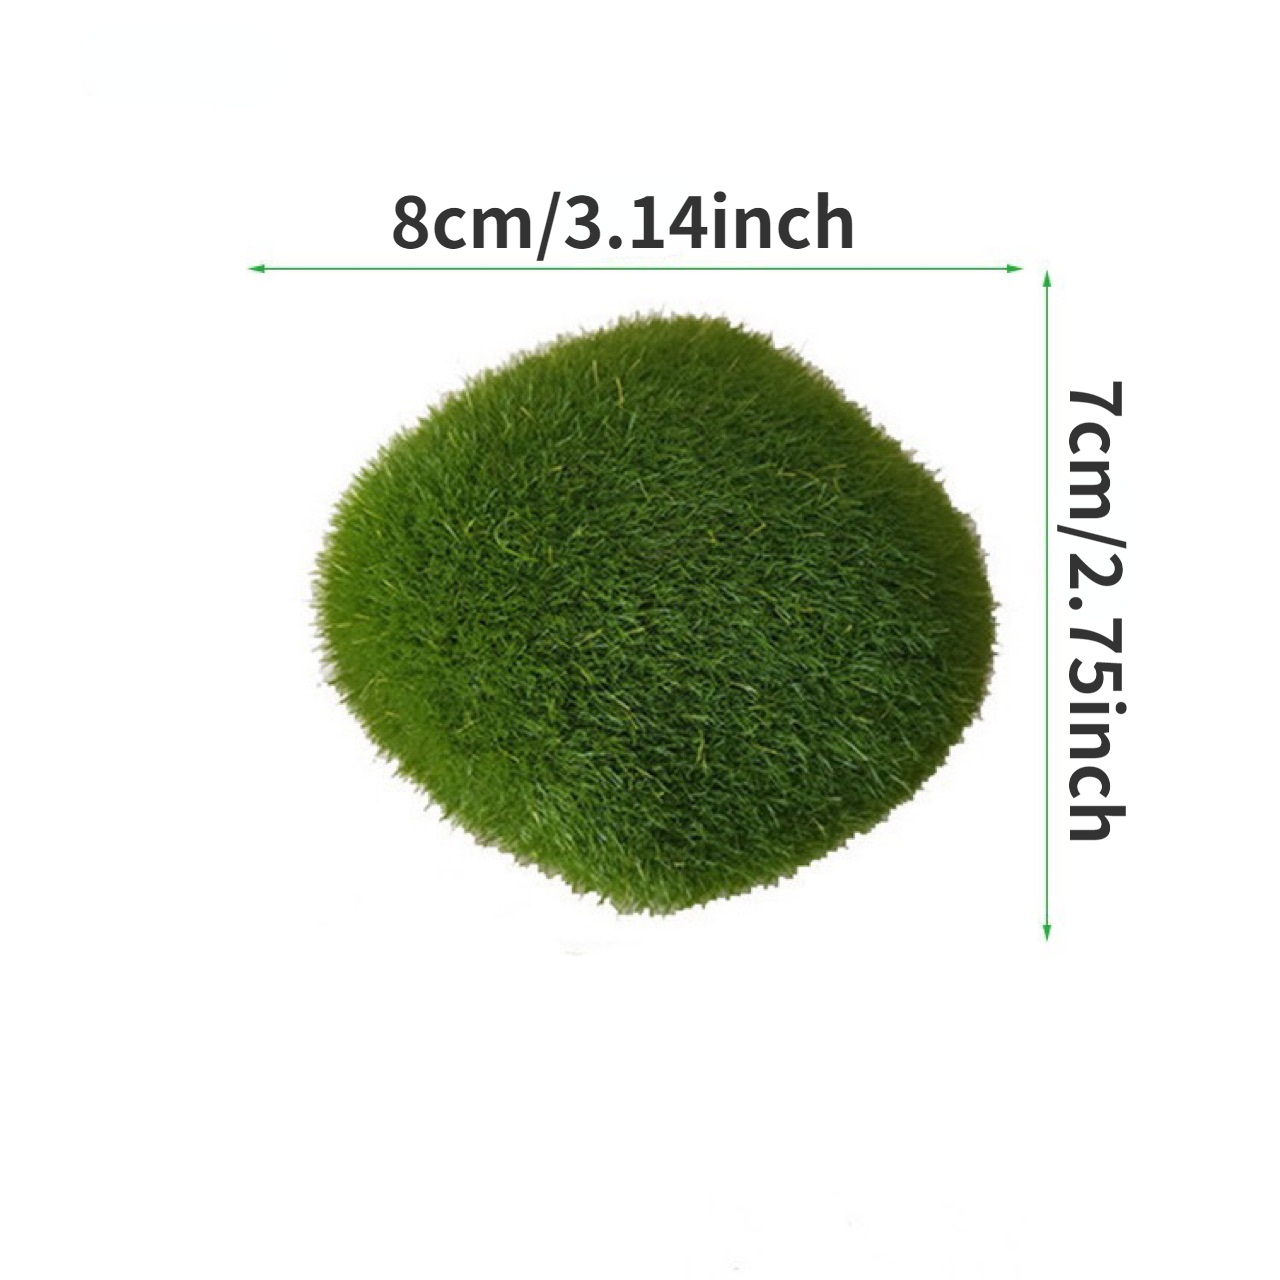 10PCS Artificial Moss Rocks Decorative, DIY Stone Miniature Green